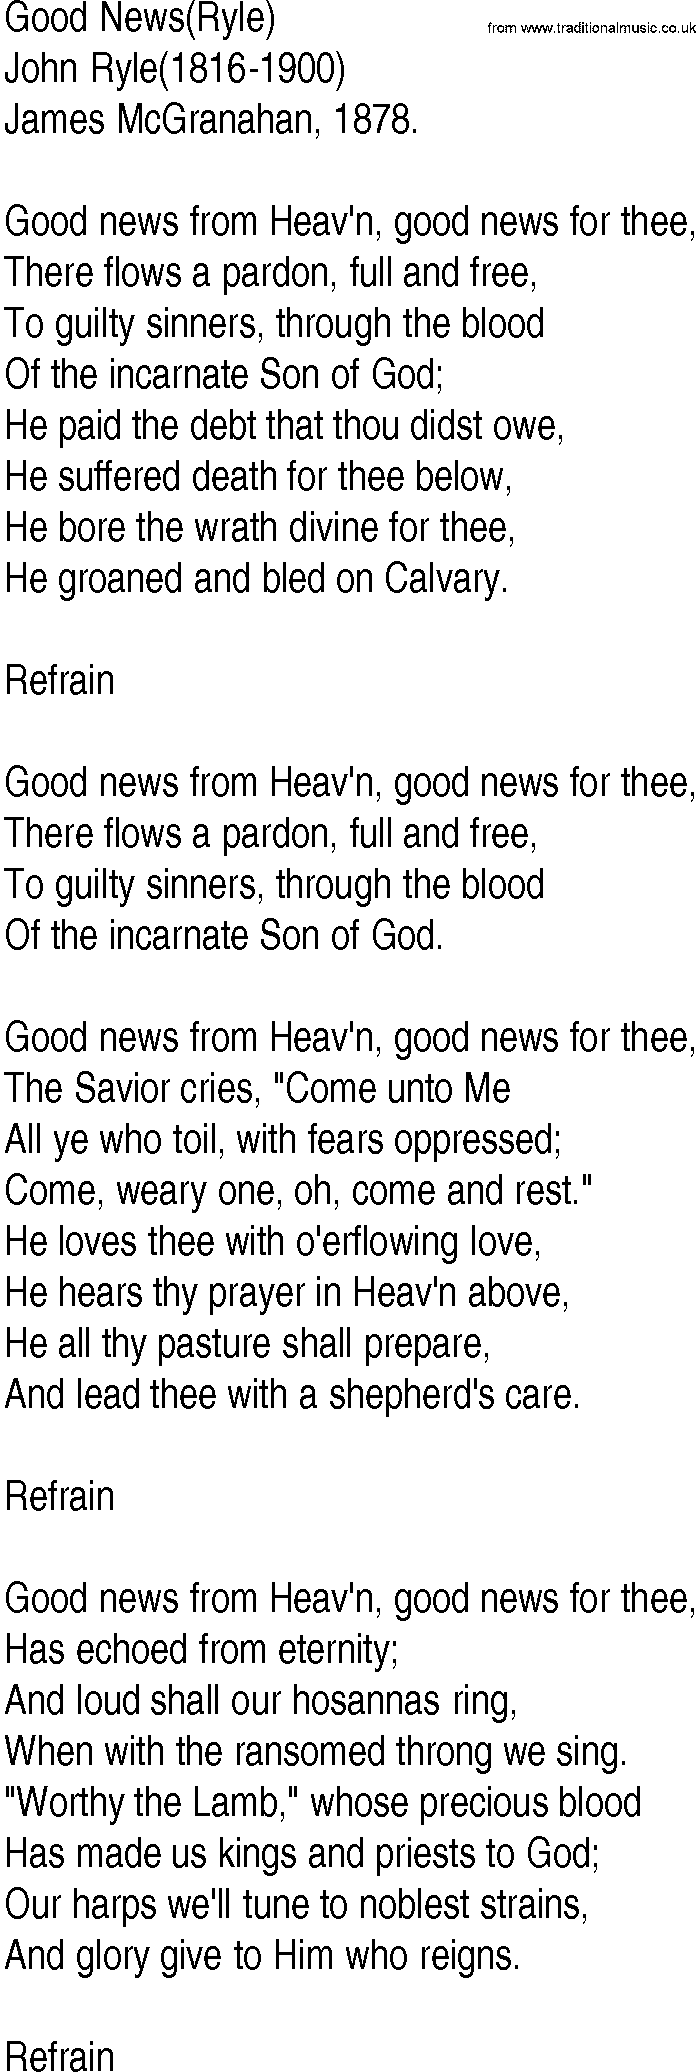 Hymn and Gospel Song: Good News(Ryle) by John Ryle lyrics